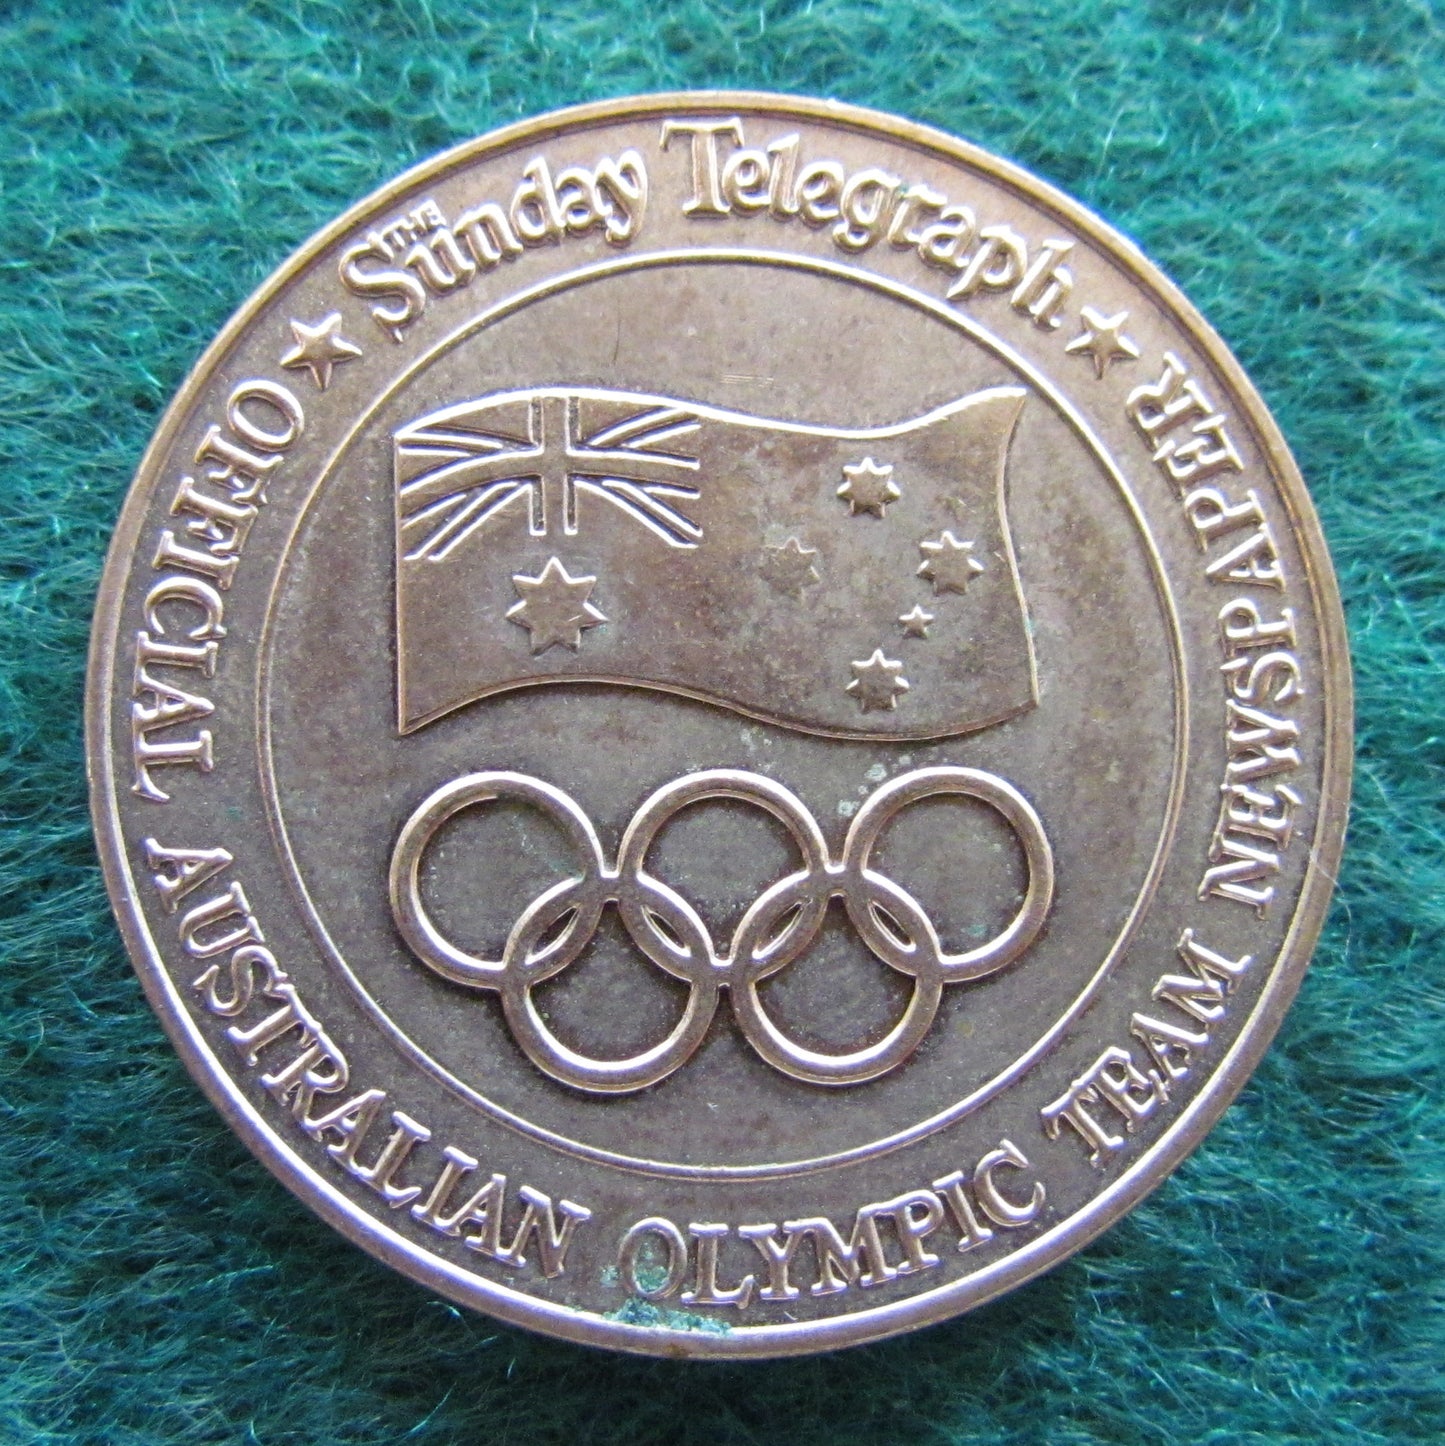 Atlanta 1996 Commemorative Medal - Sunday Telegraph